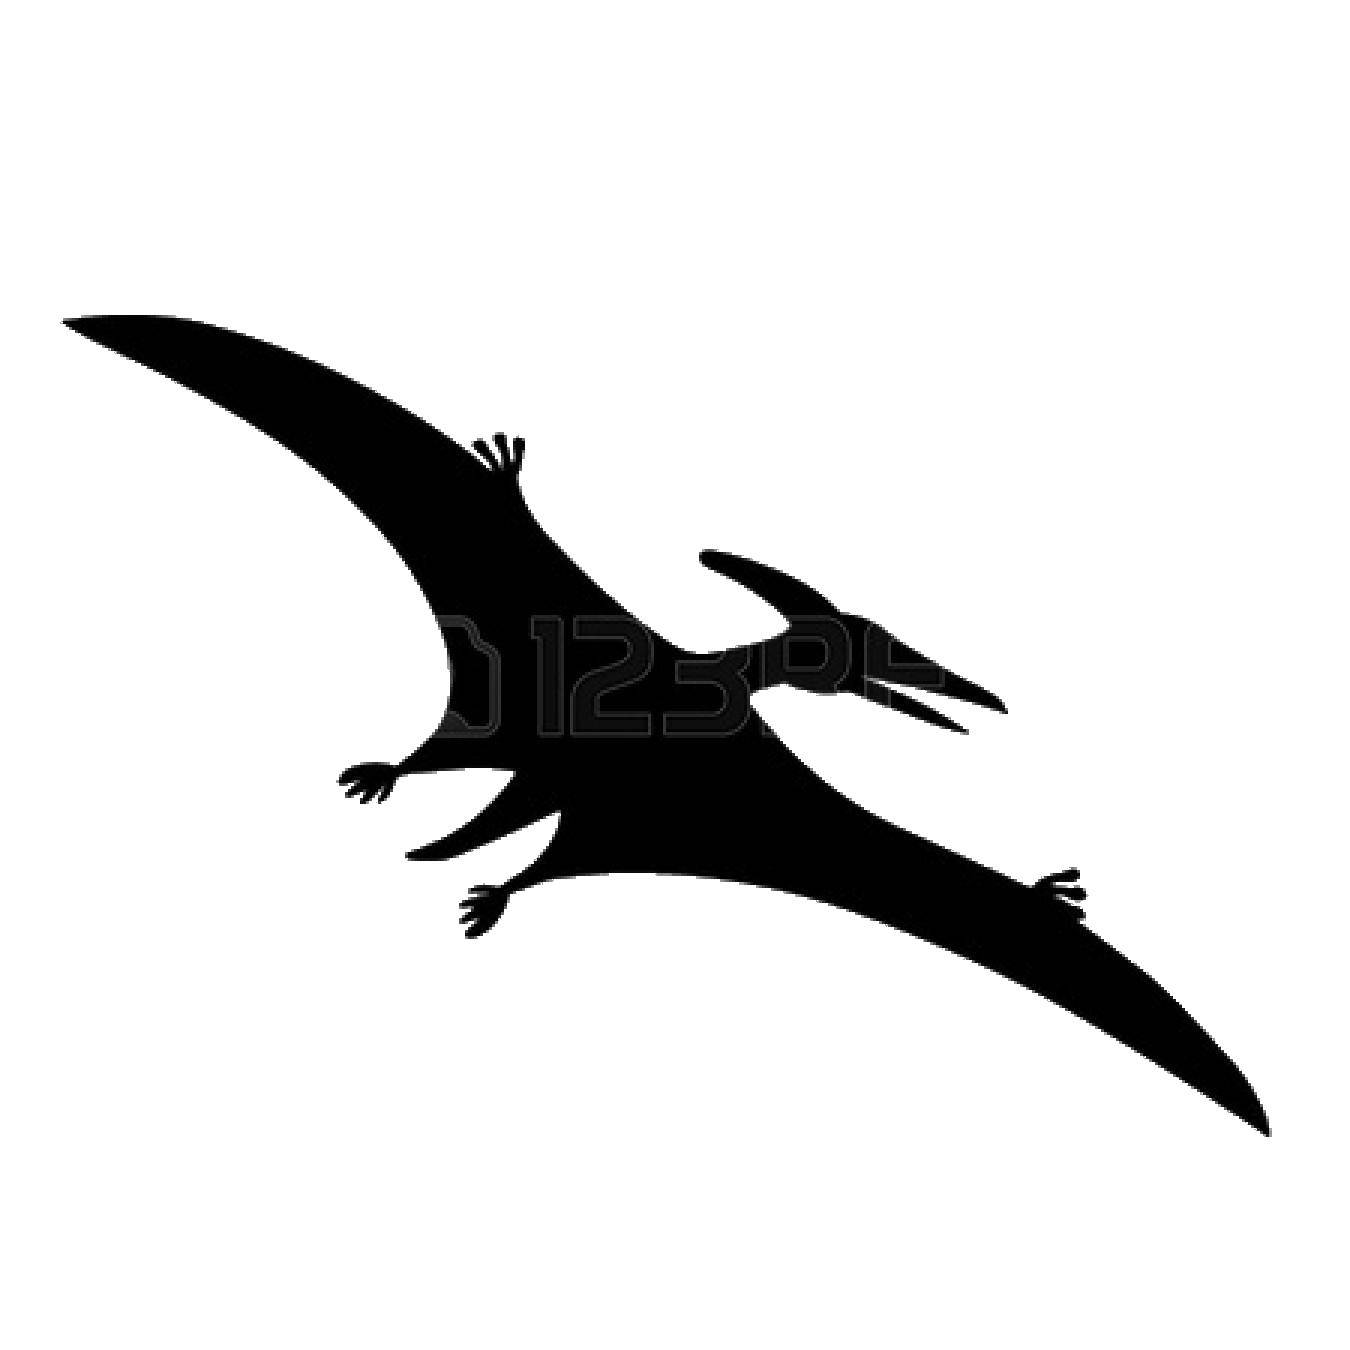 Coloring Pteranodon. Category dinosaur. Tags:  Pteranodon, dinosaur.